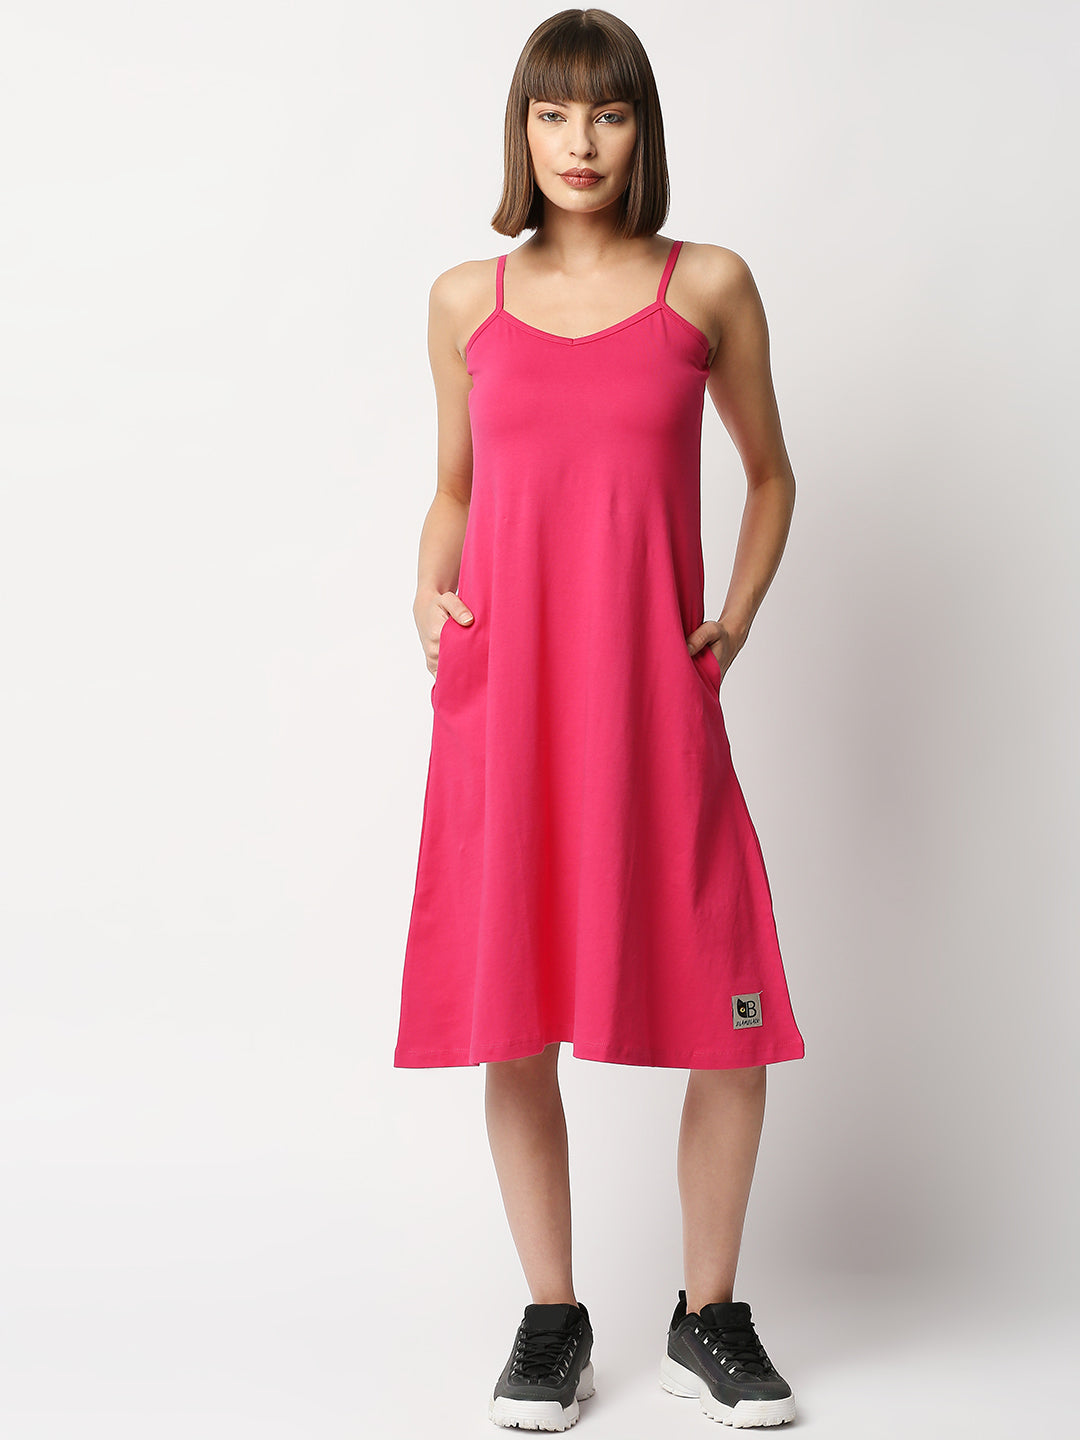 Buy BLAMBLACK Women Round neck Fusia Pink Solid Sleeveless Dresses